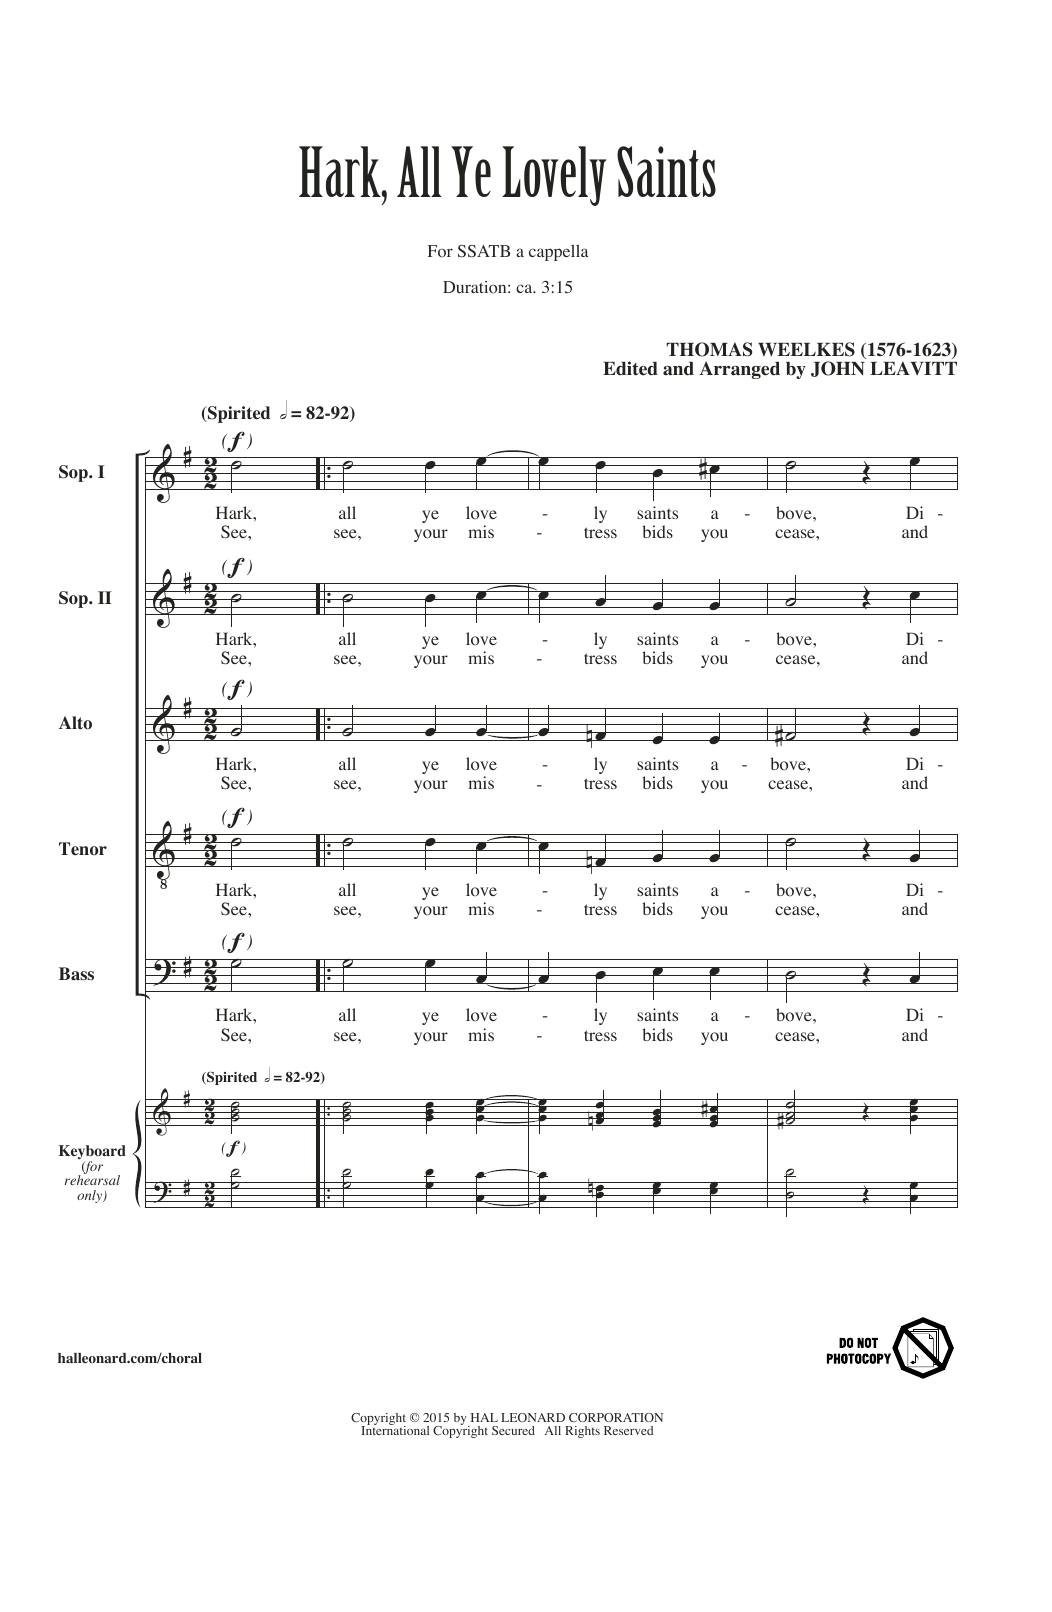 Thomas Weelkes Hark All Ye Lovely Saints (arr. John Leavitt) Sheet Music Notes & Chords for Choral SSATB - Download or Print PDF